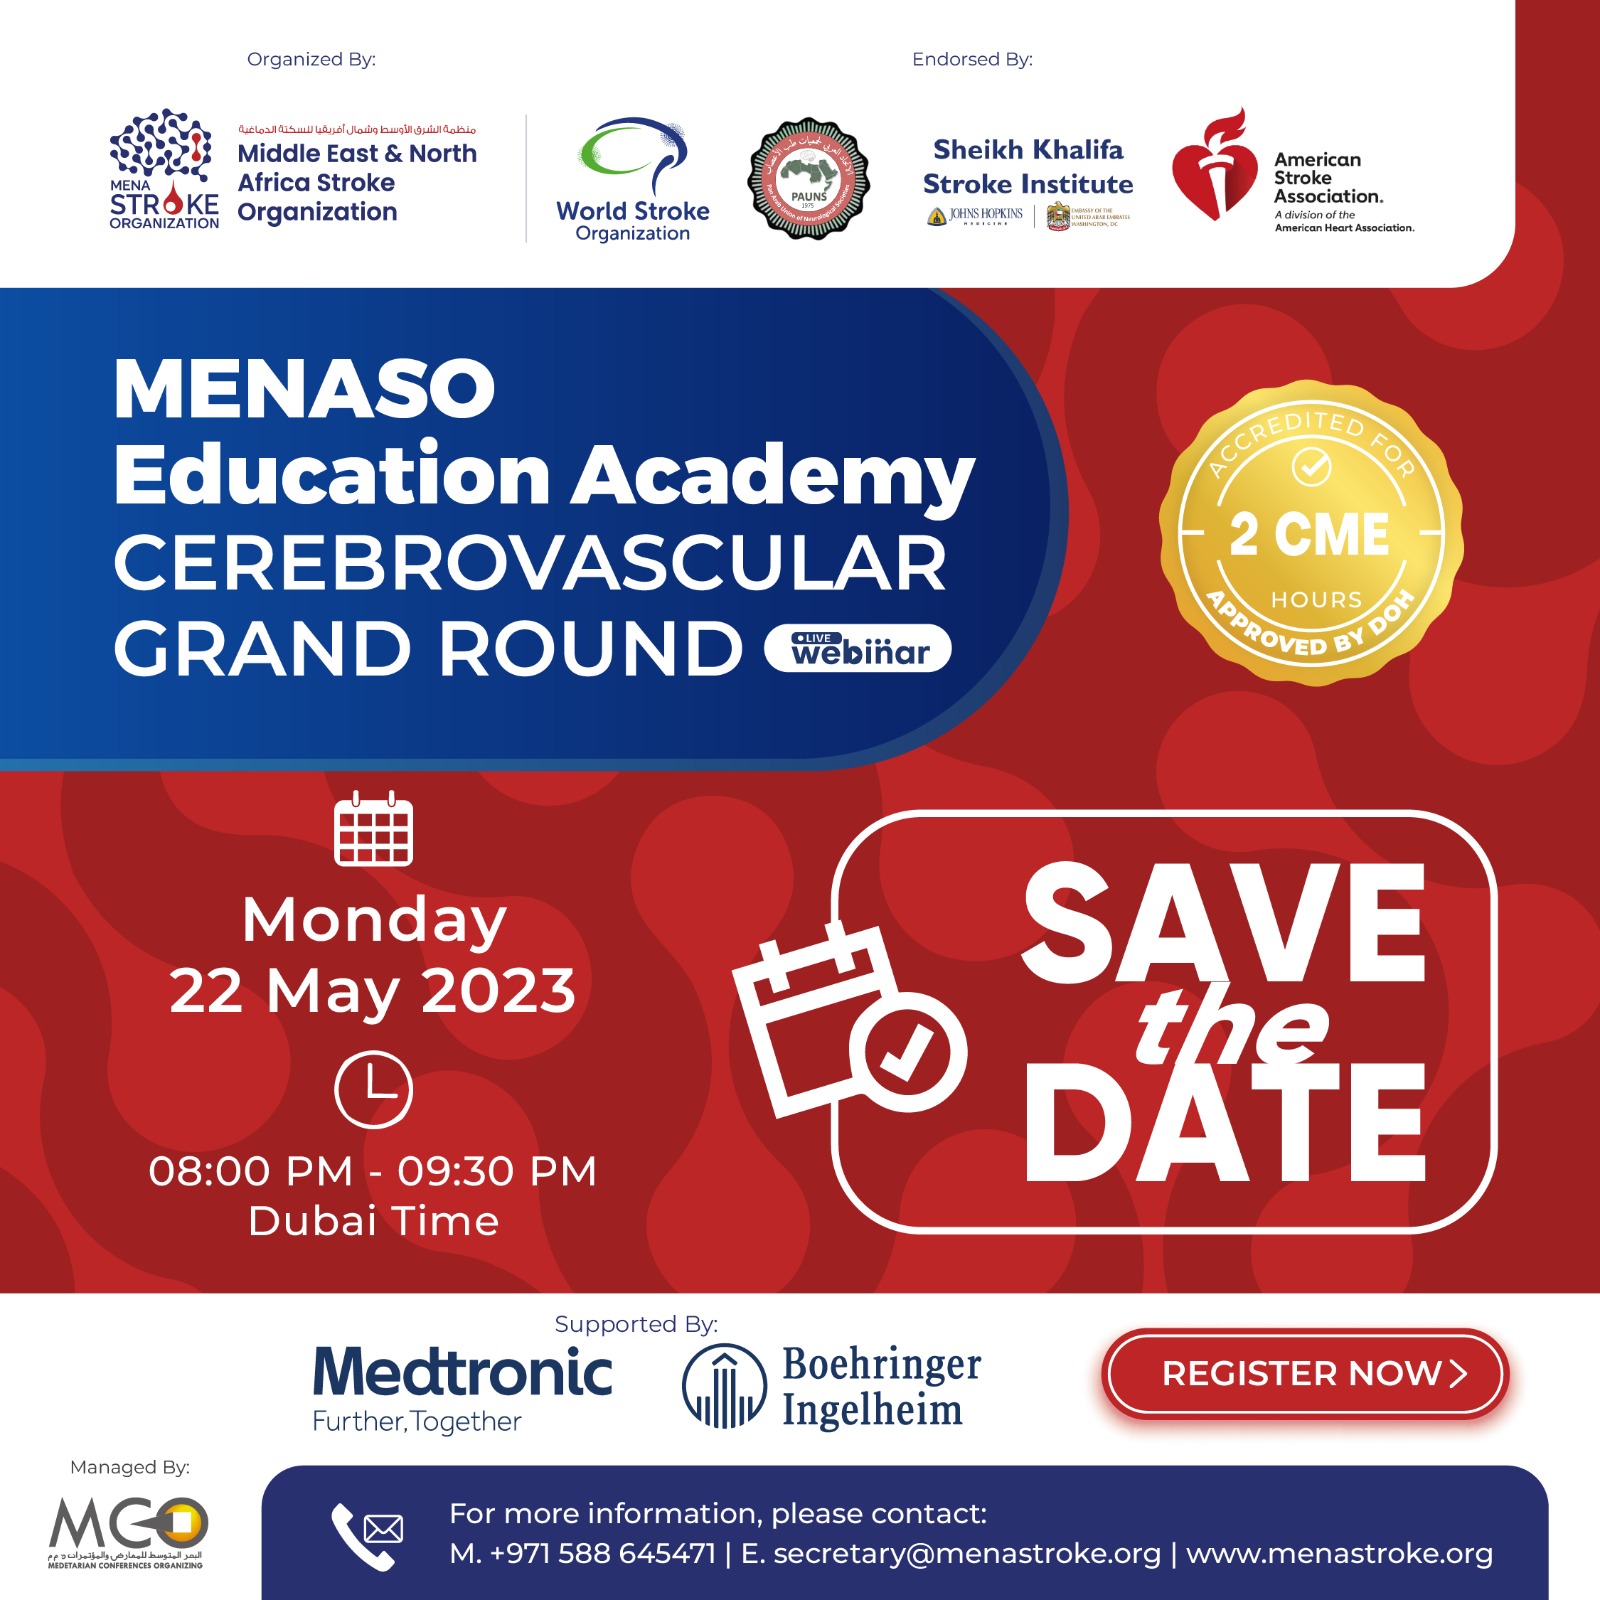 MENASO Education Academy Cerebrovascular Grand Round May 2023